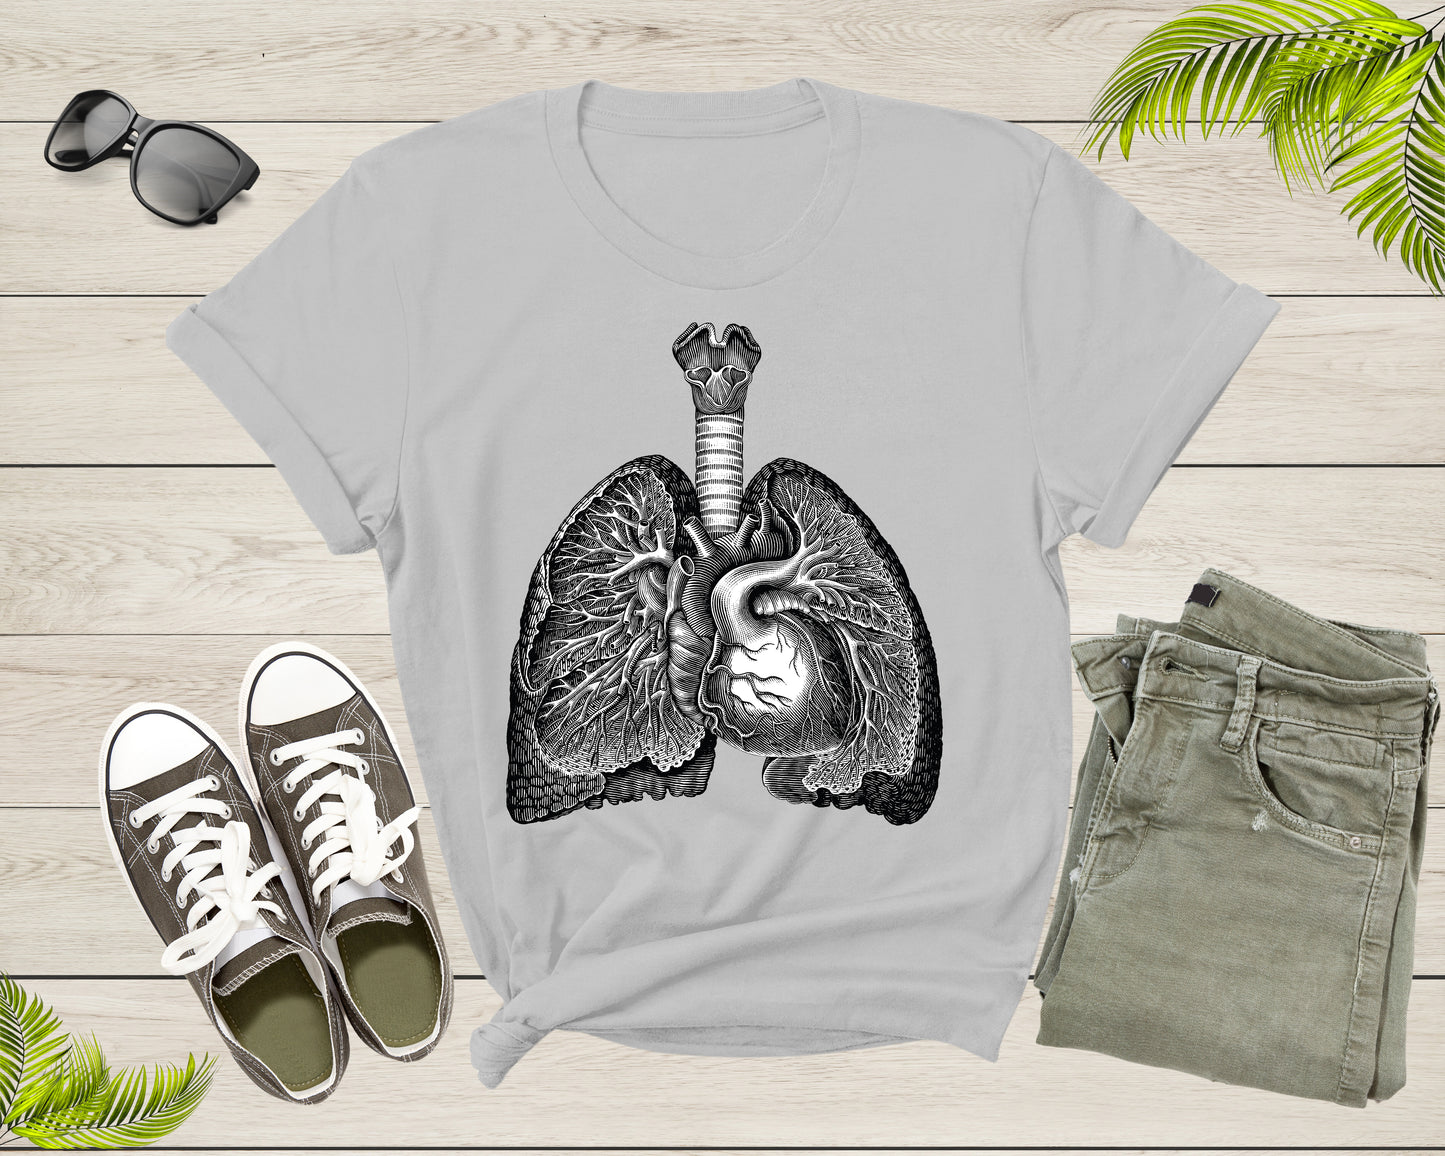 Human Internal Organs Lungs Heart Upper Body Anatomy Lover T-Shirt Doctor Nurse Gift T Shirt for Men Women Kids Boys Girls Tshirt